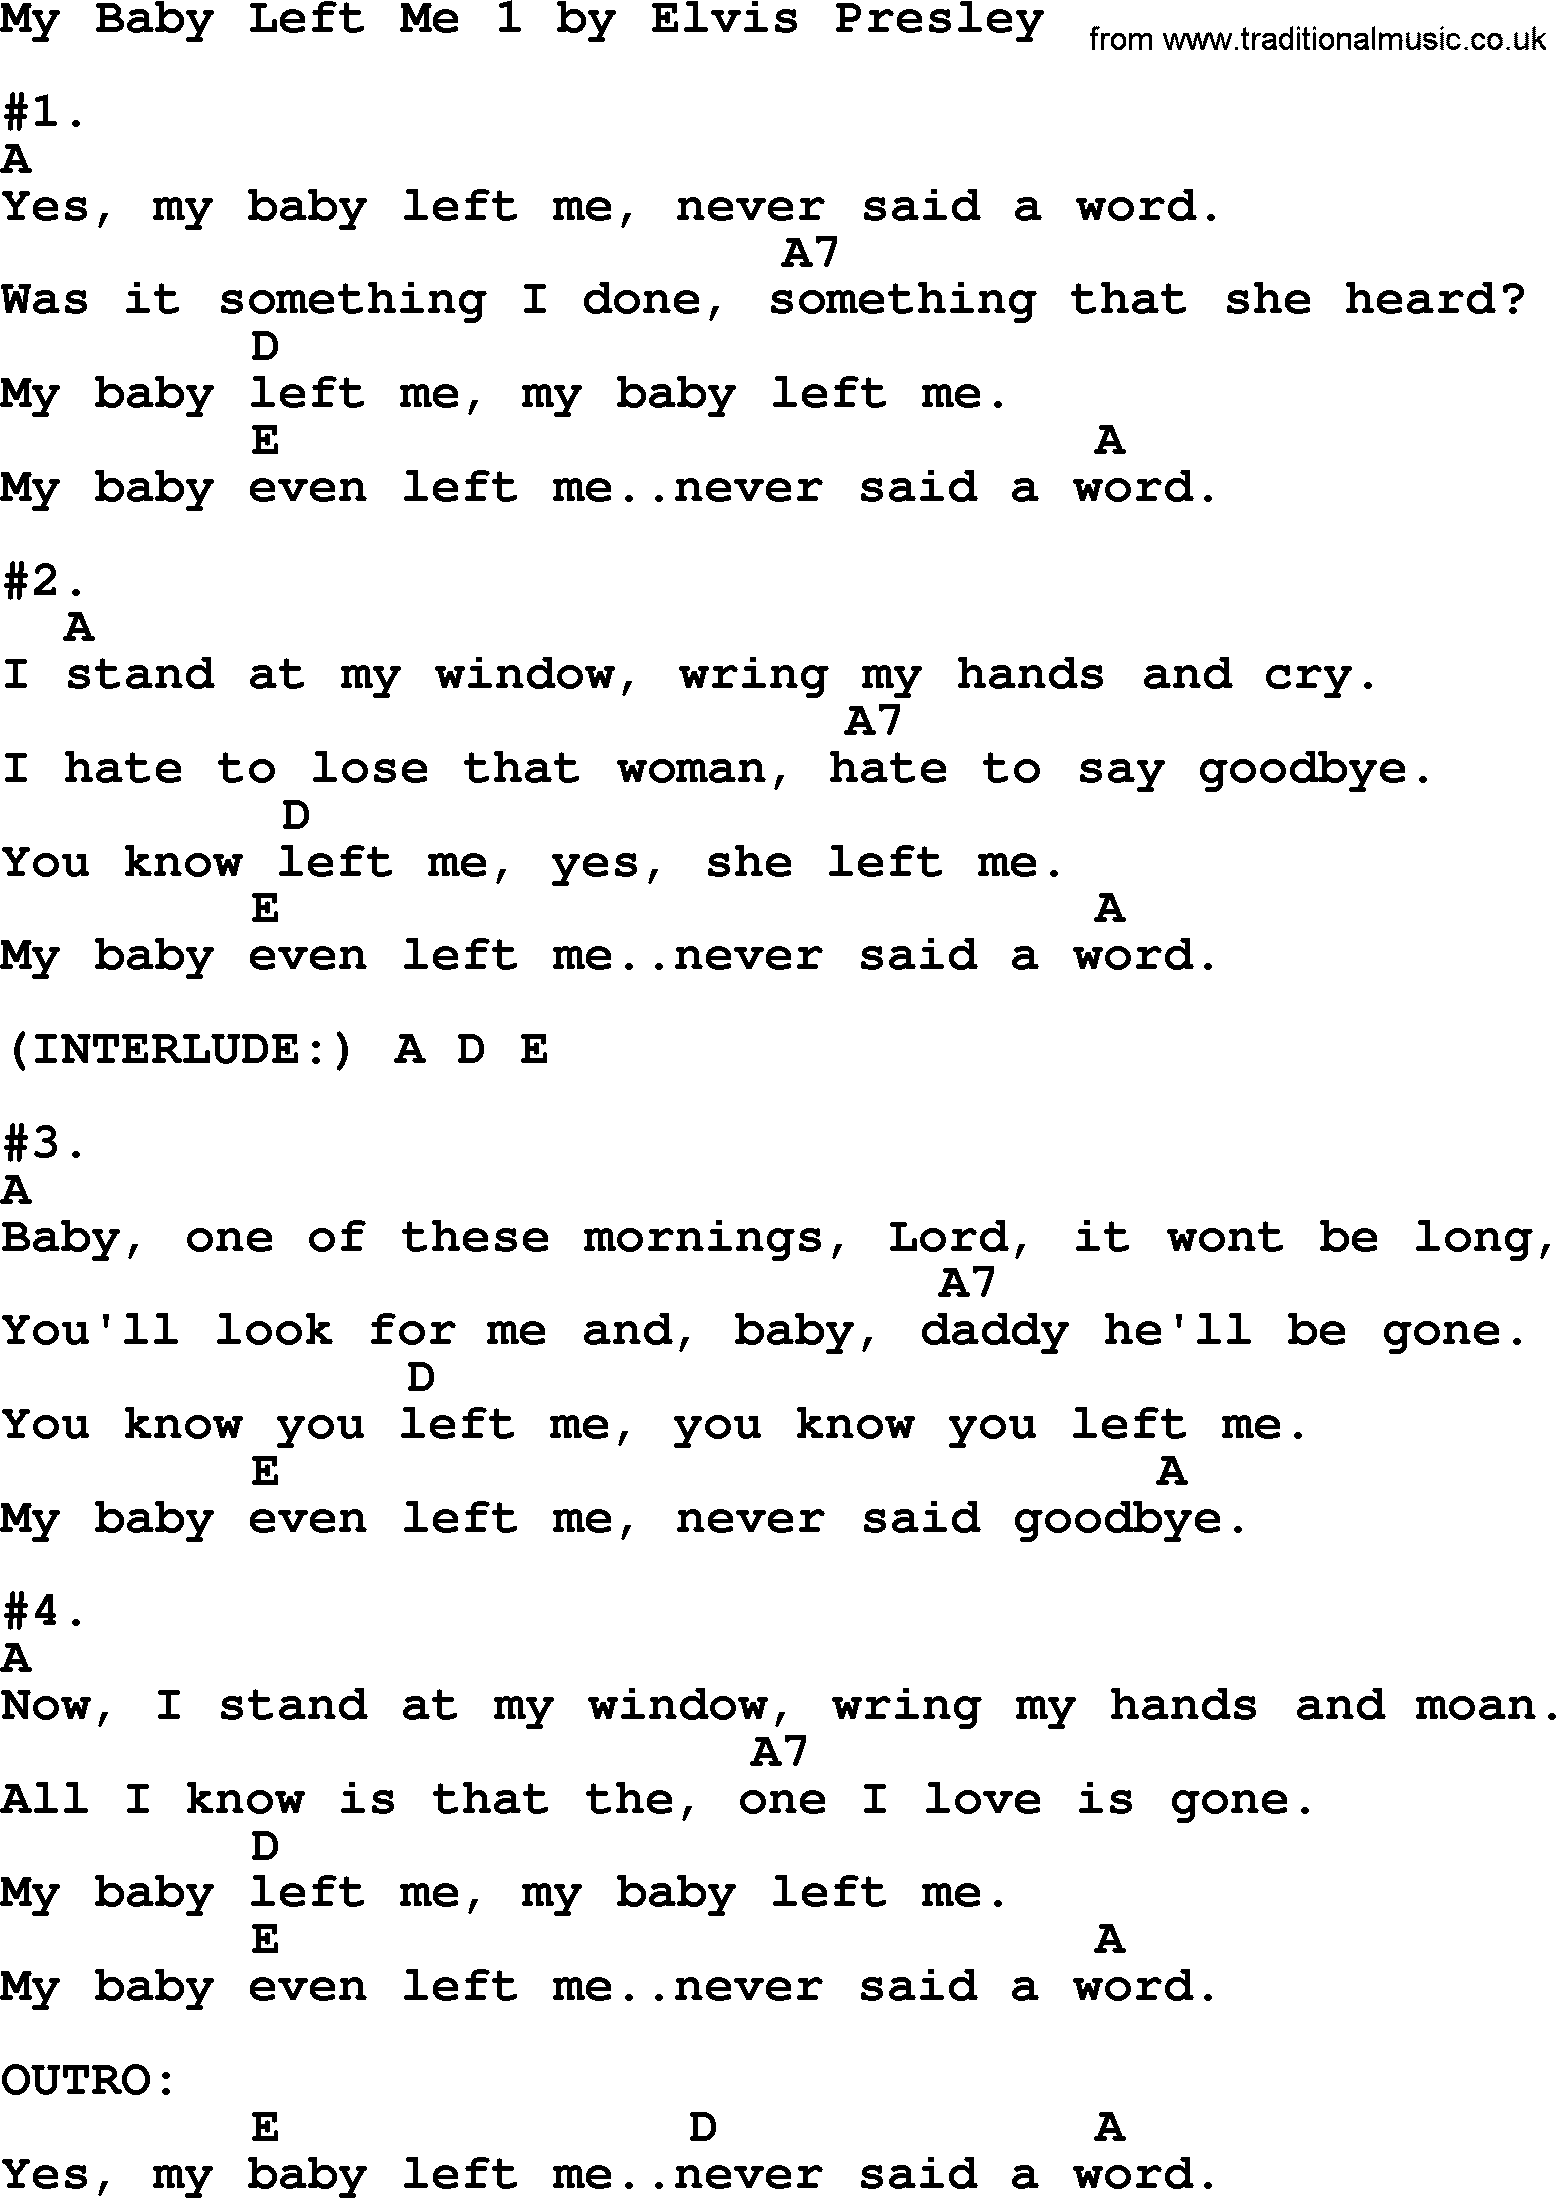 Elvis Presley song: My Baby Left Me 1, lyrics and chords